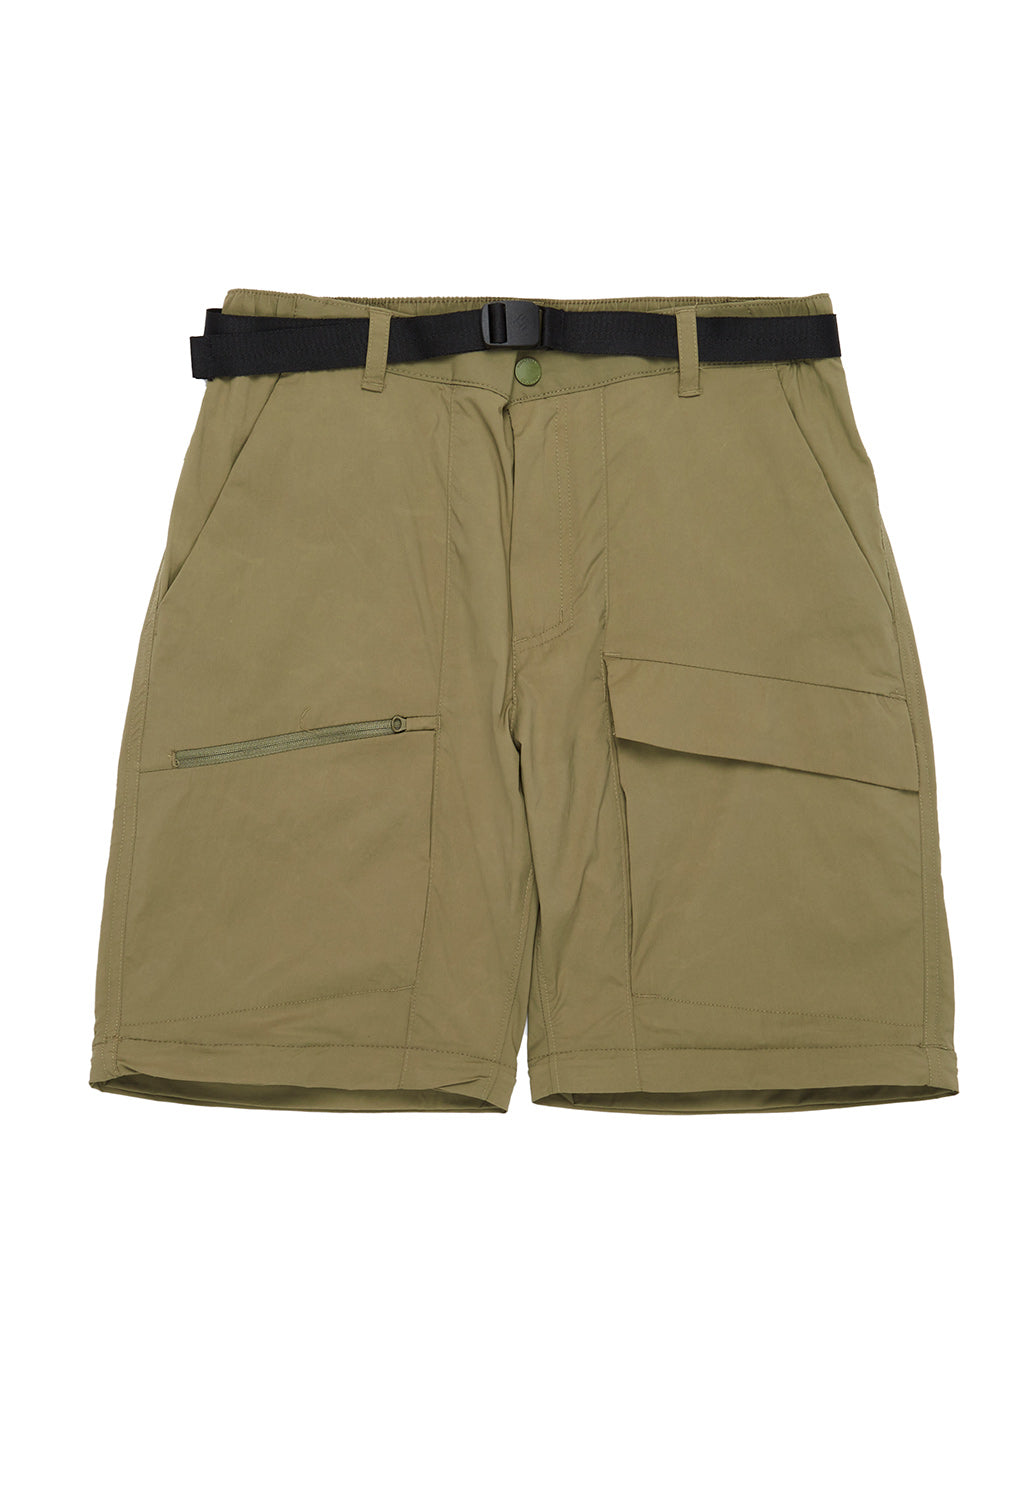 Columbia Men's Maxtrail Lite Convertible Pants - Stone Green